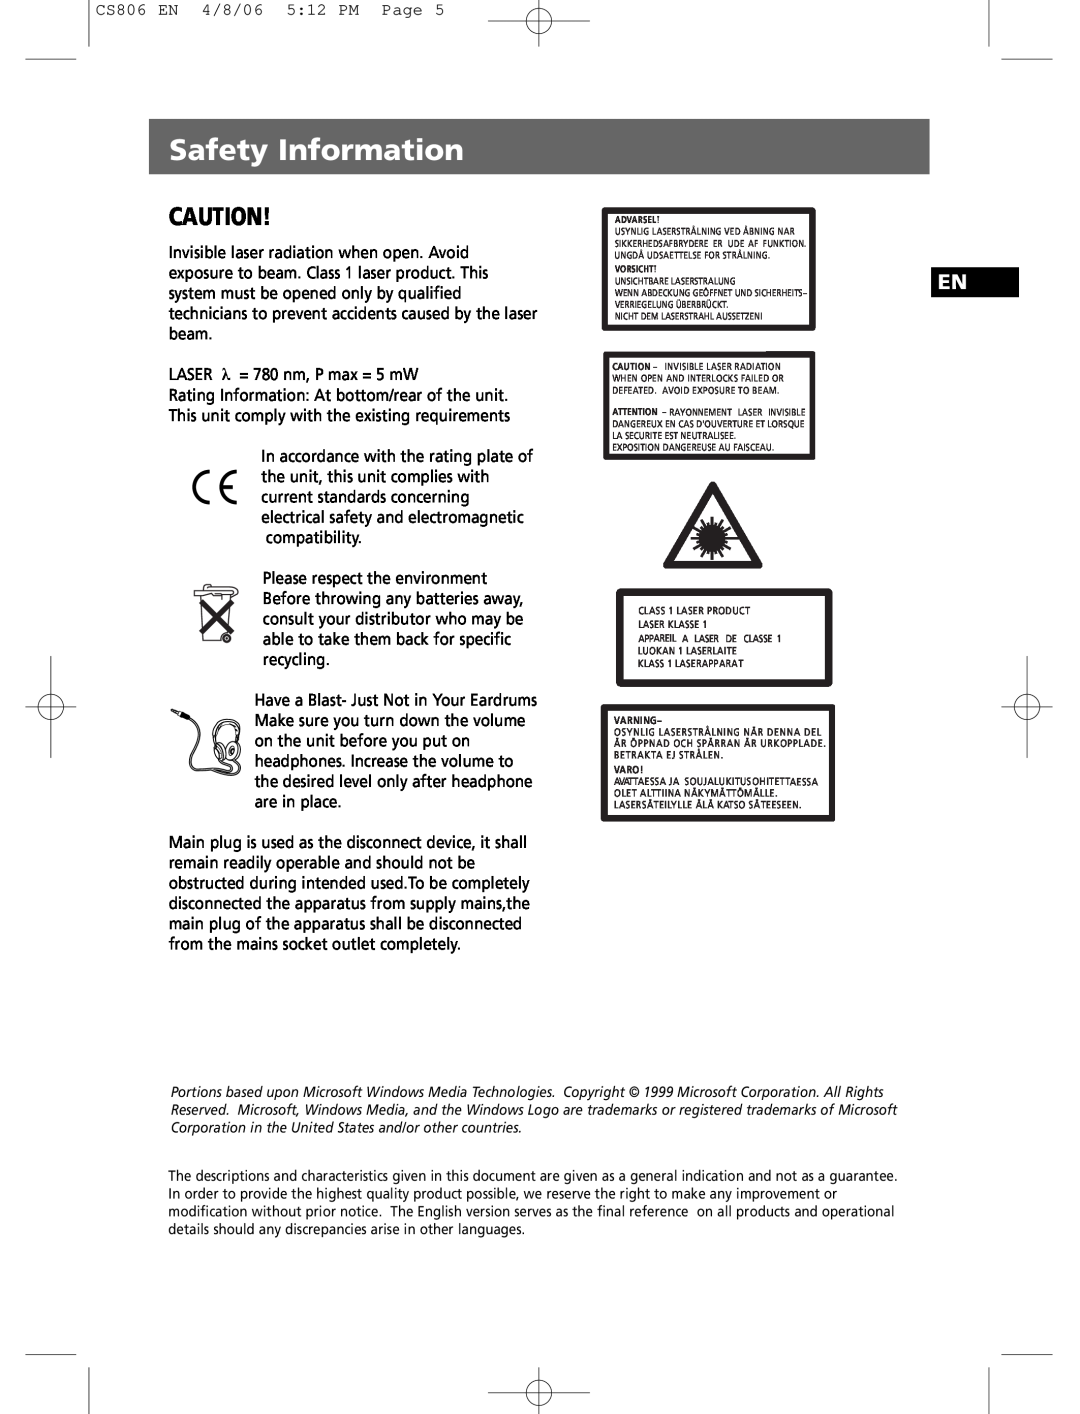 Technicolor - Thomson CS806 user manual Safety Information 